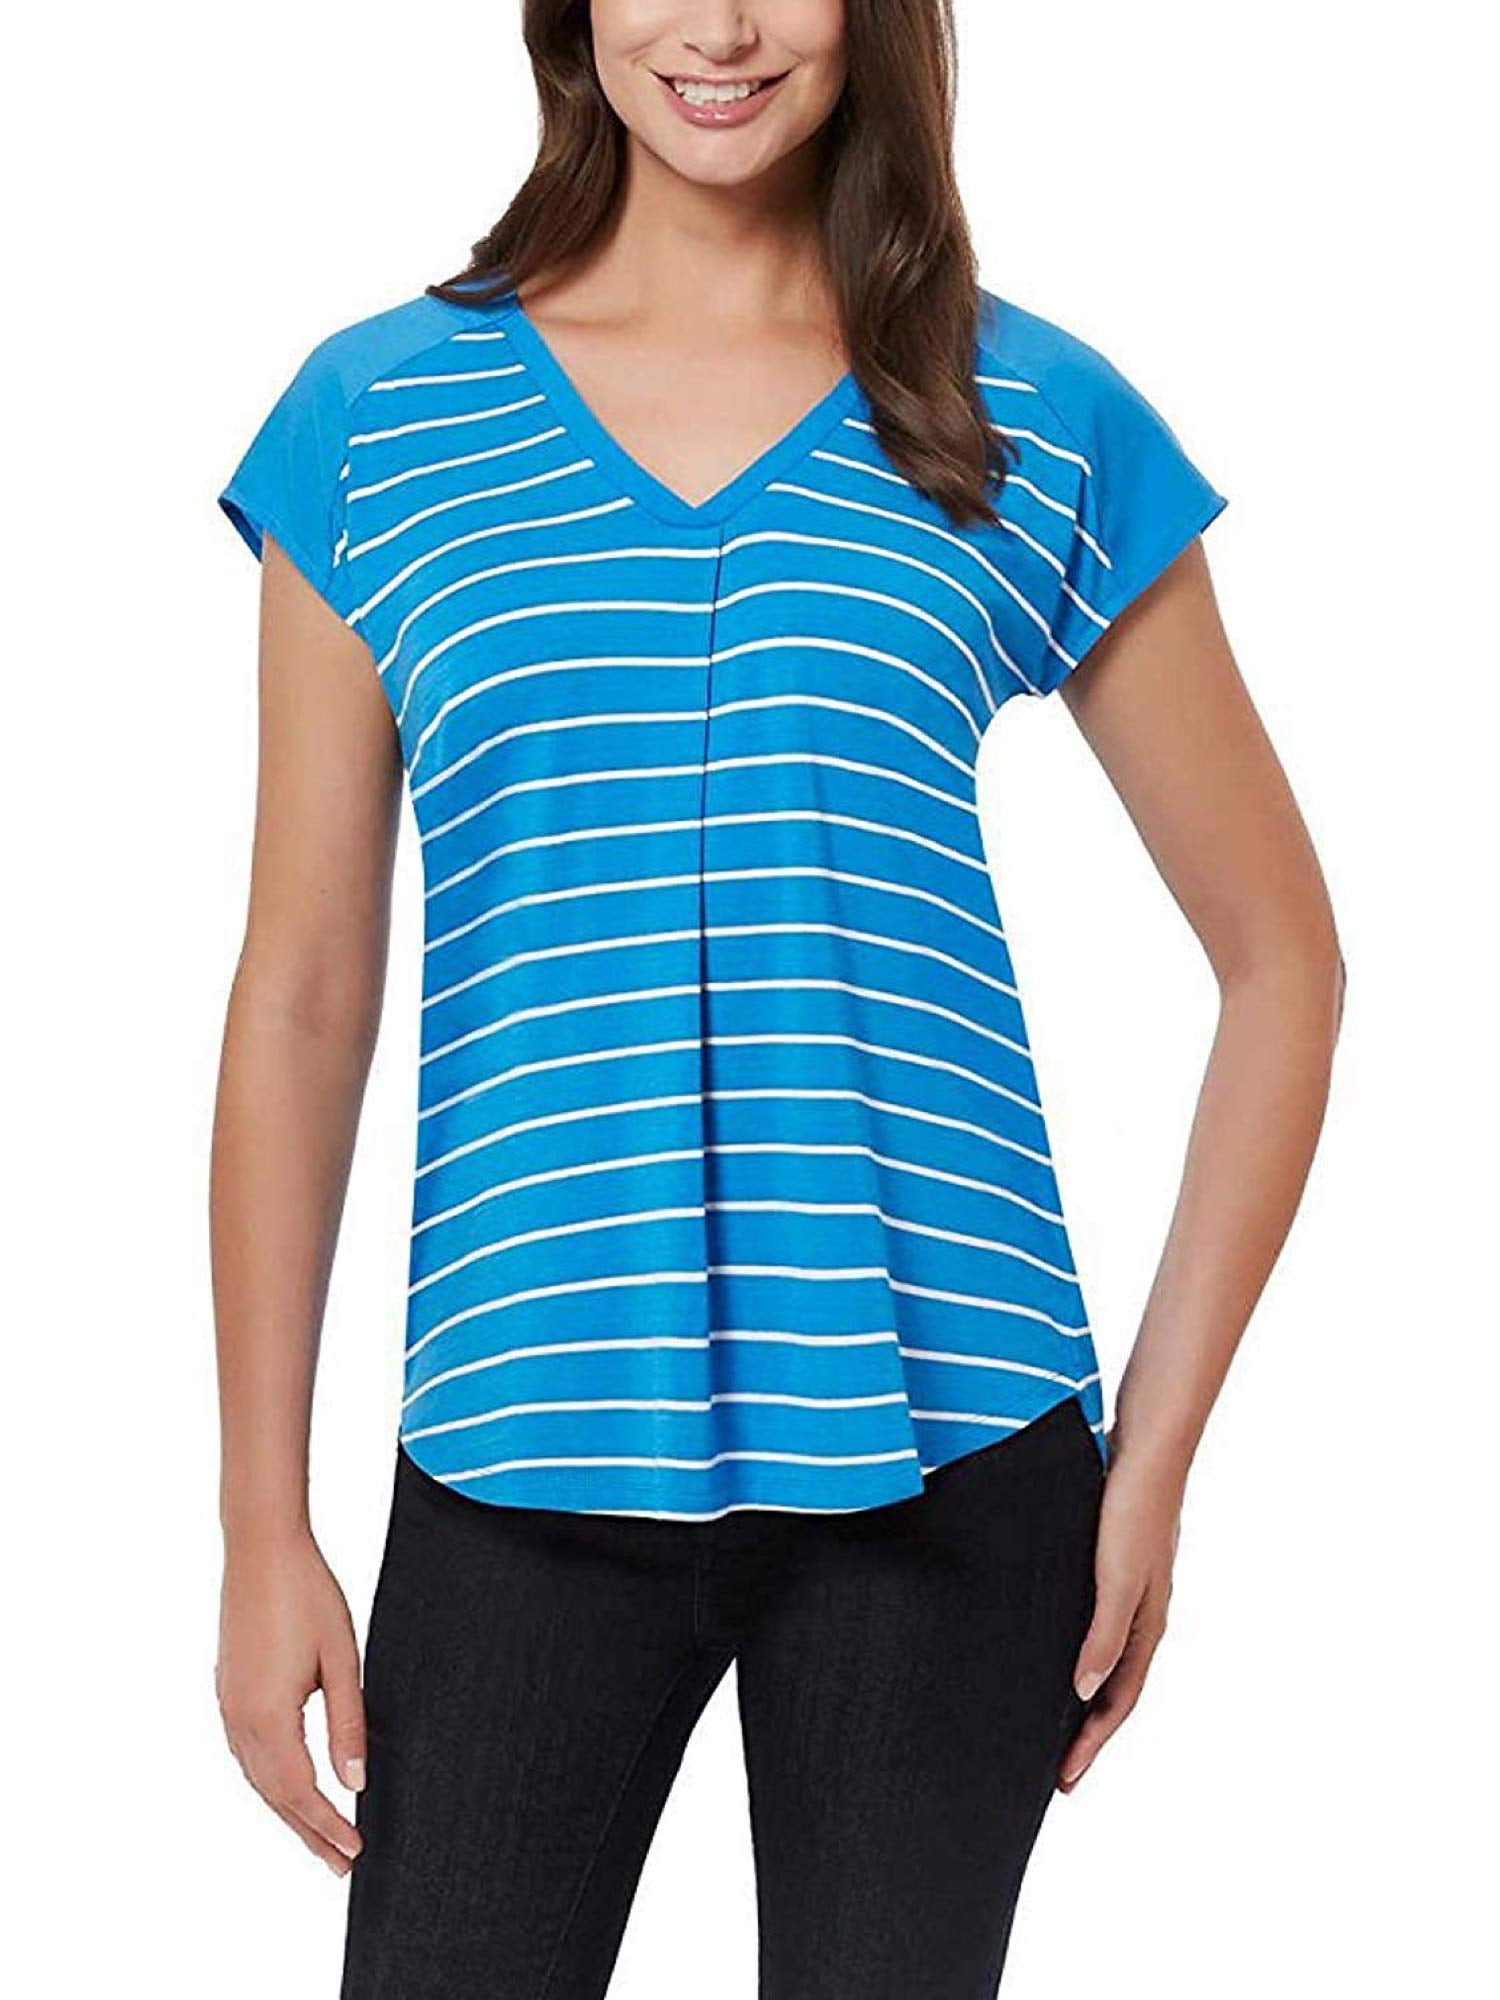 Adrienne Vittadini Women's, Short Sleeve V-Neck Top, Blue, M - Walmart.com